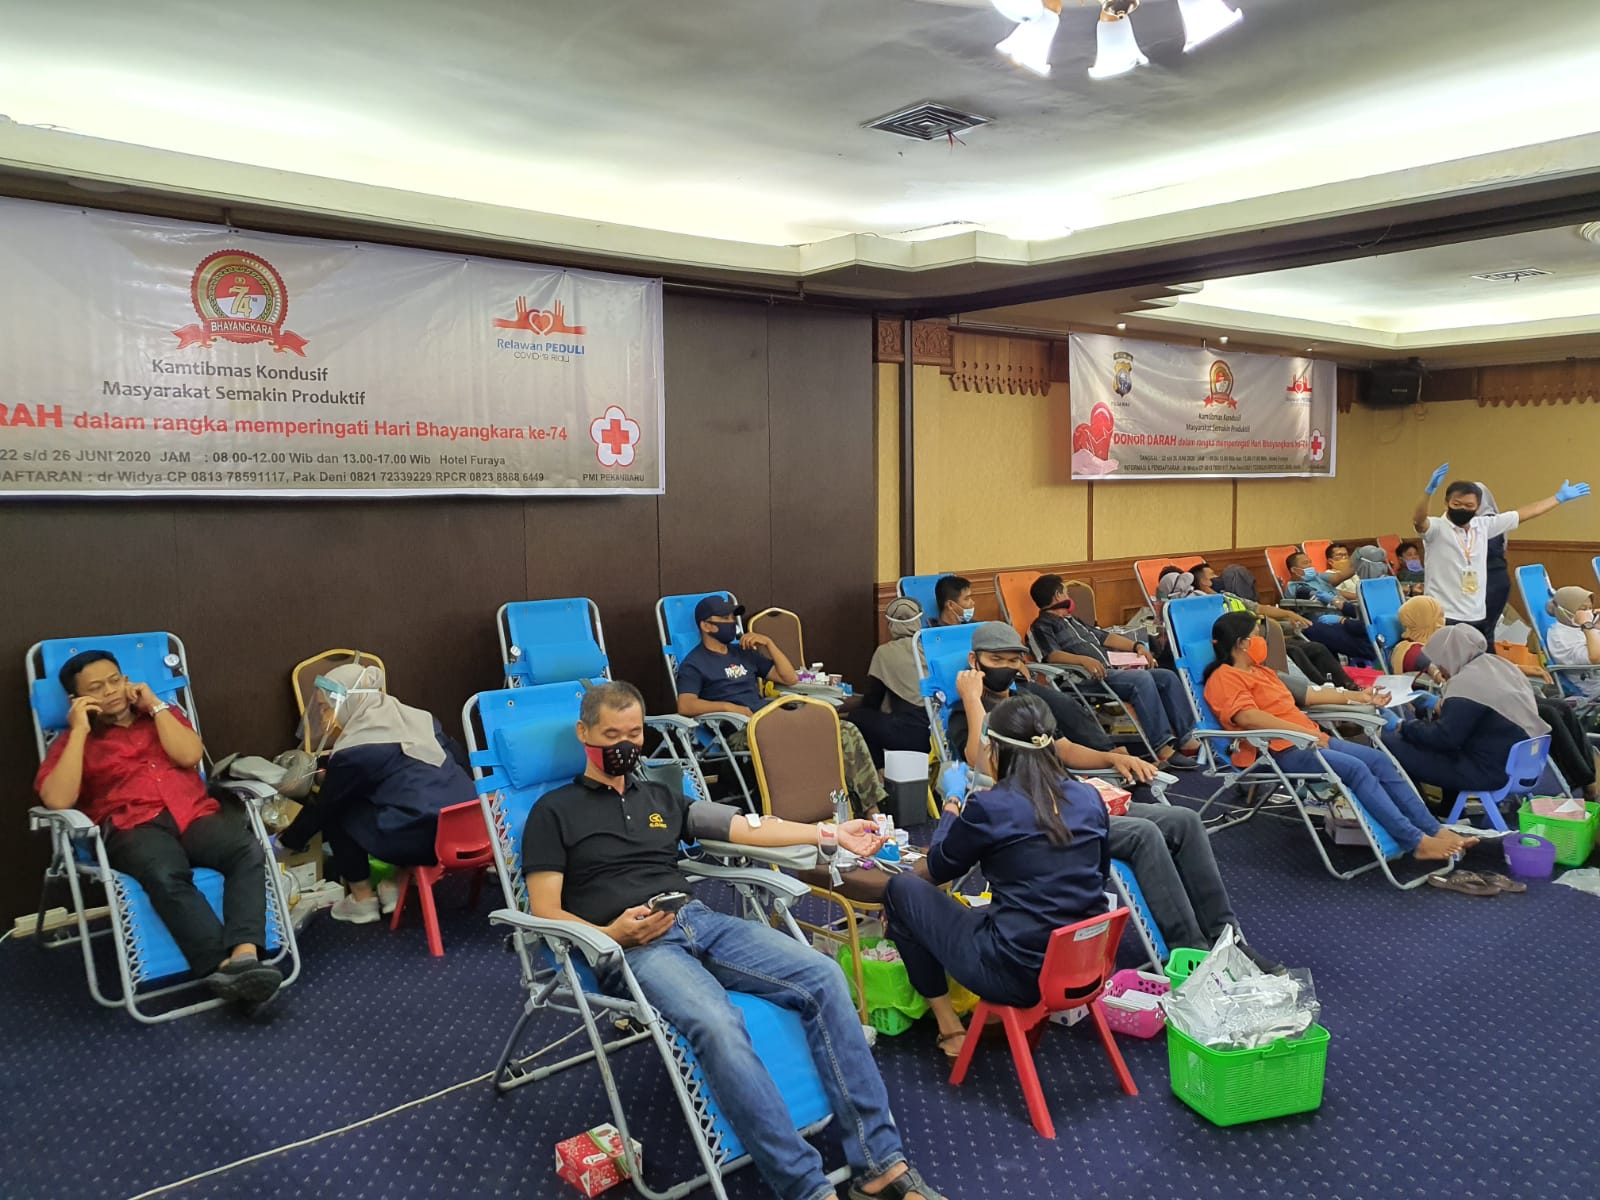 Baksos yang ditaja Polda Riau bersama dengan Tim Relawan Peduli Covid-19, berlangsung di Hotel Furaya Pekanbaru.